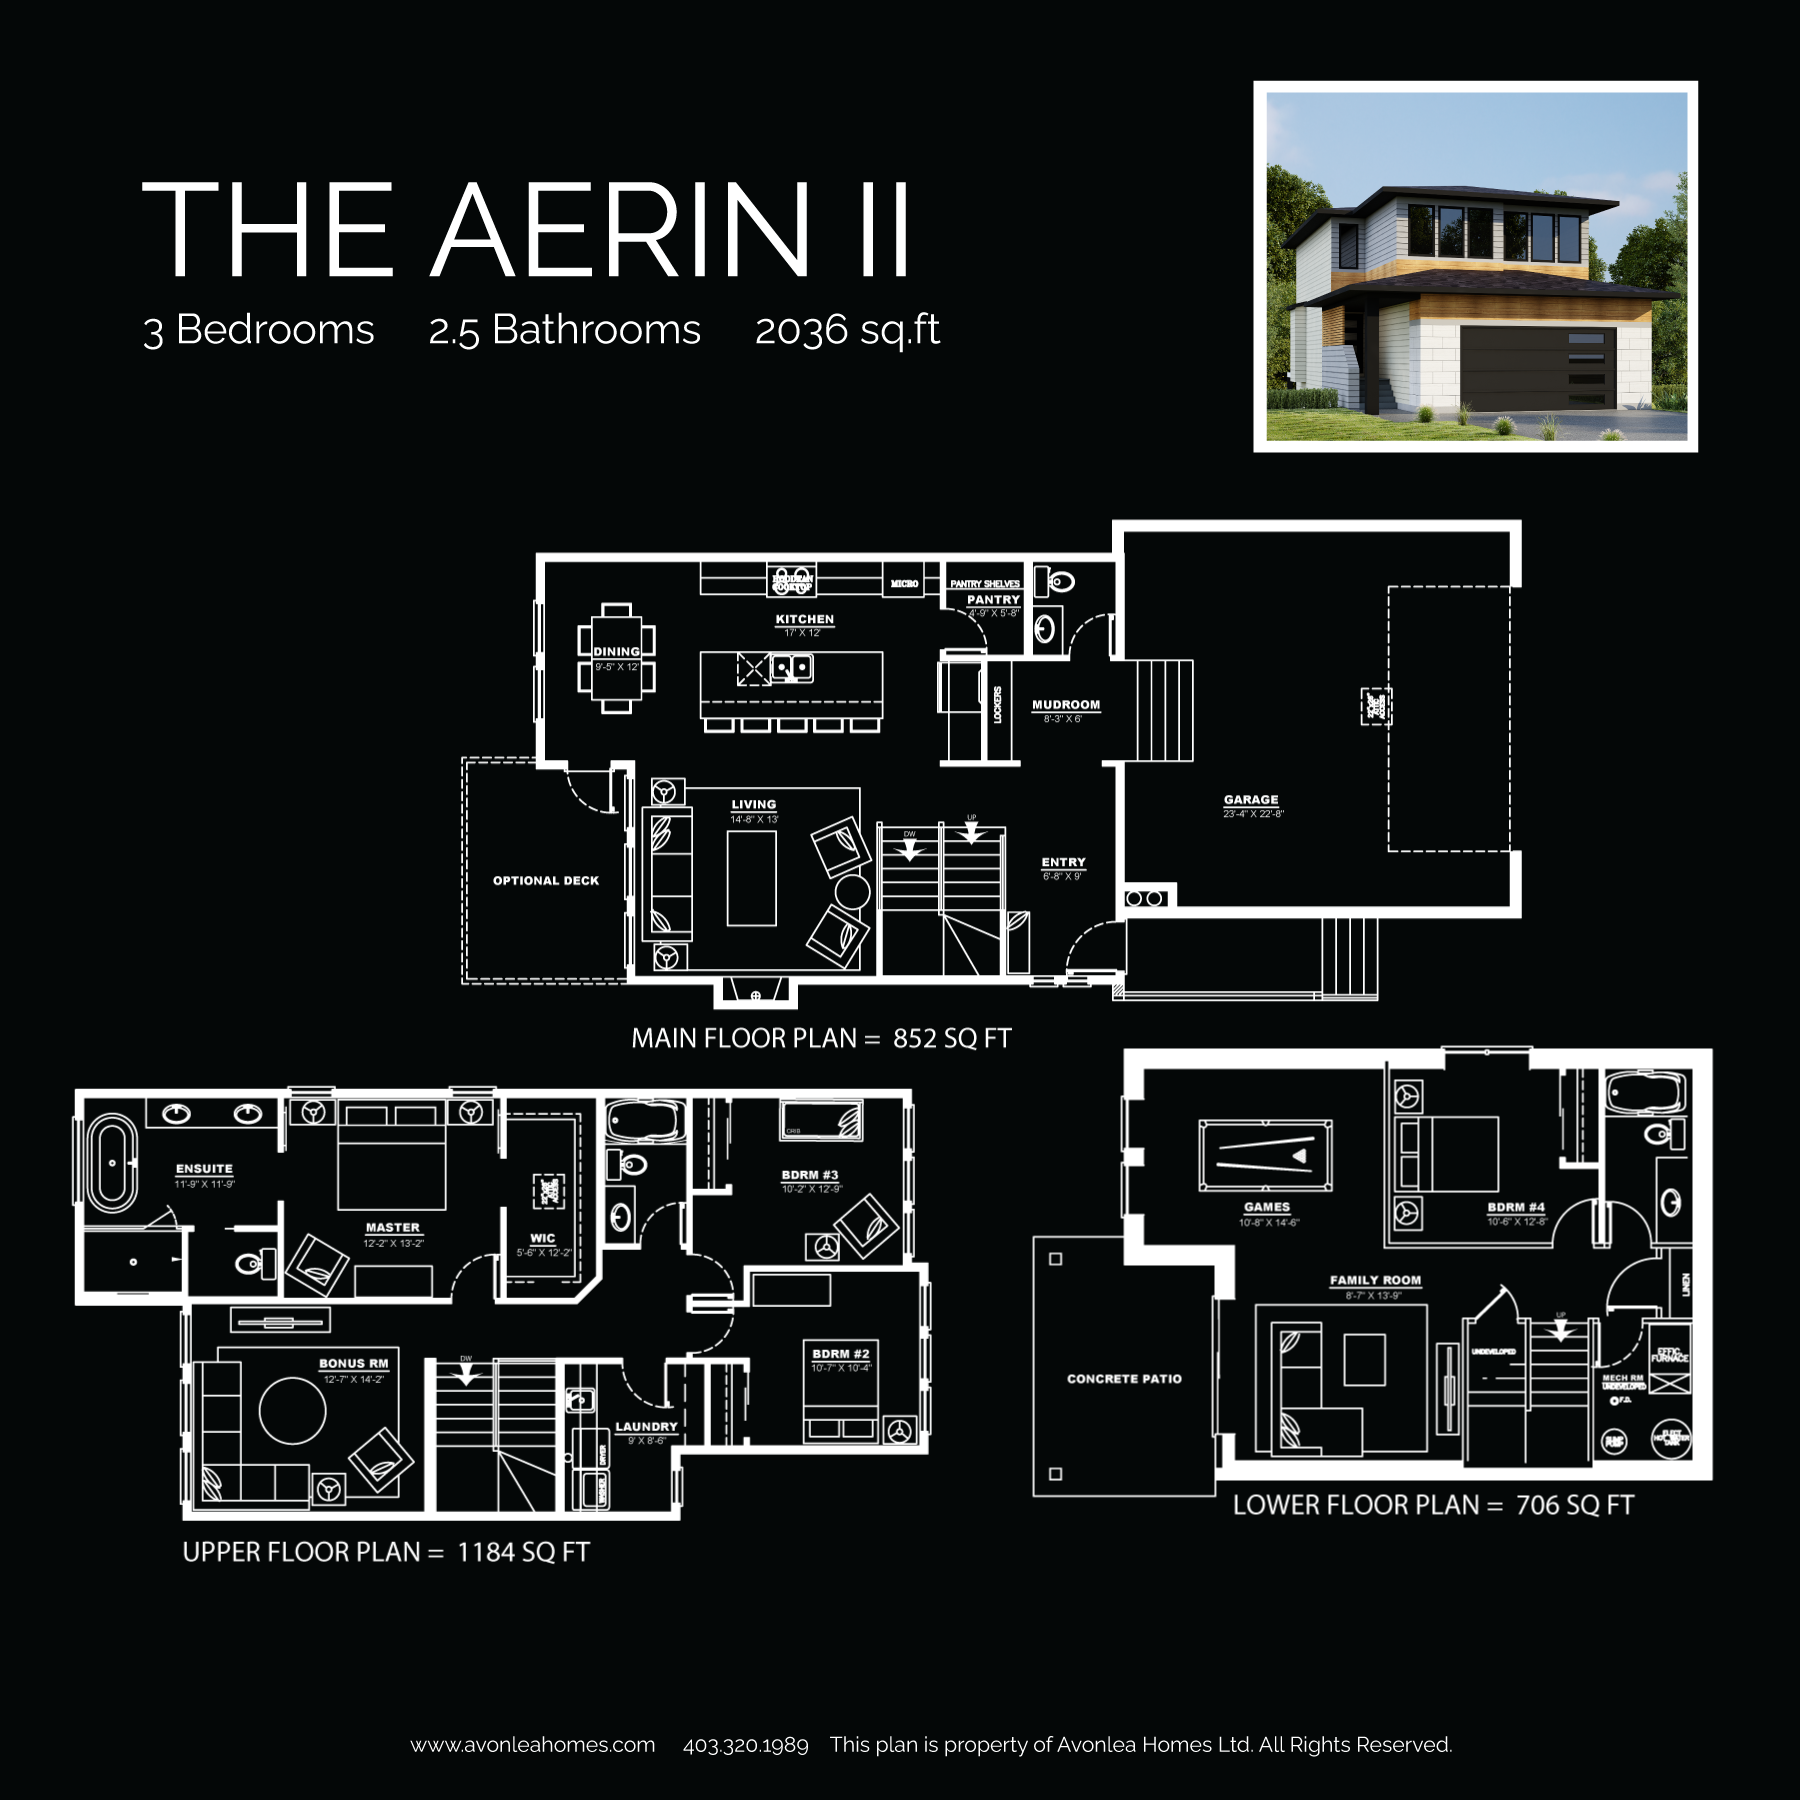 The Aerin II